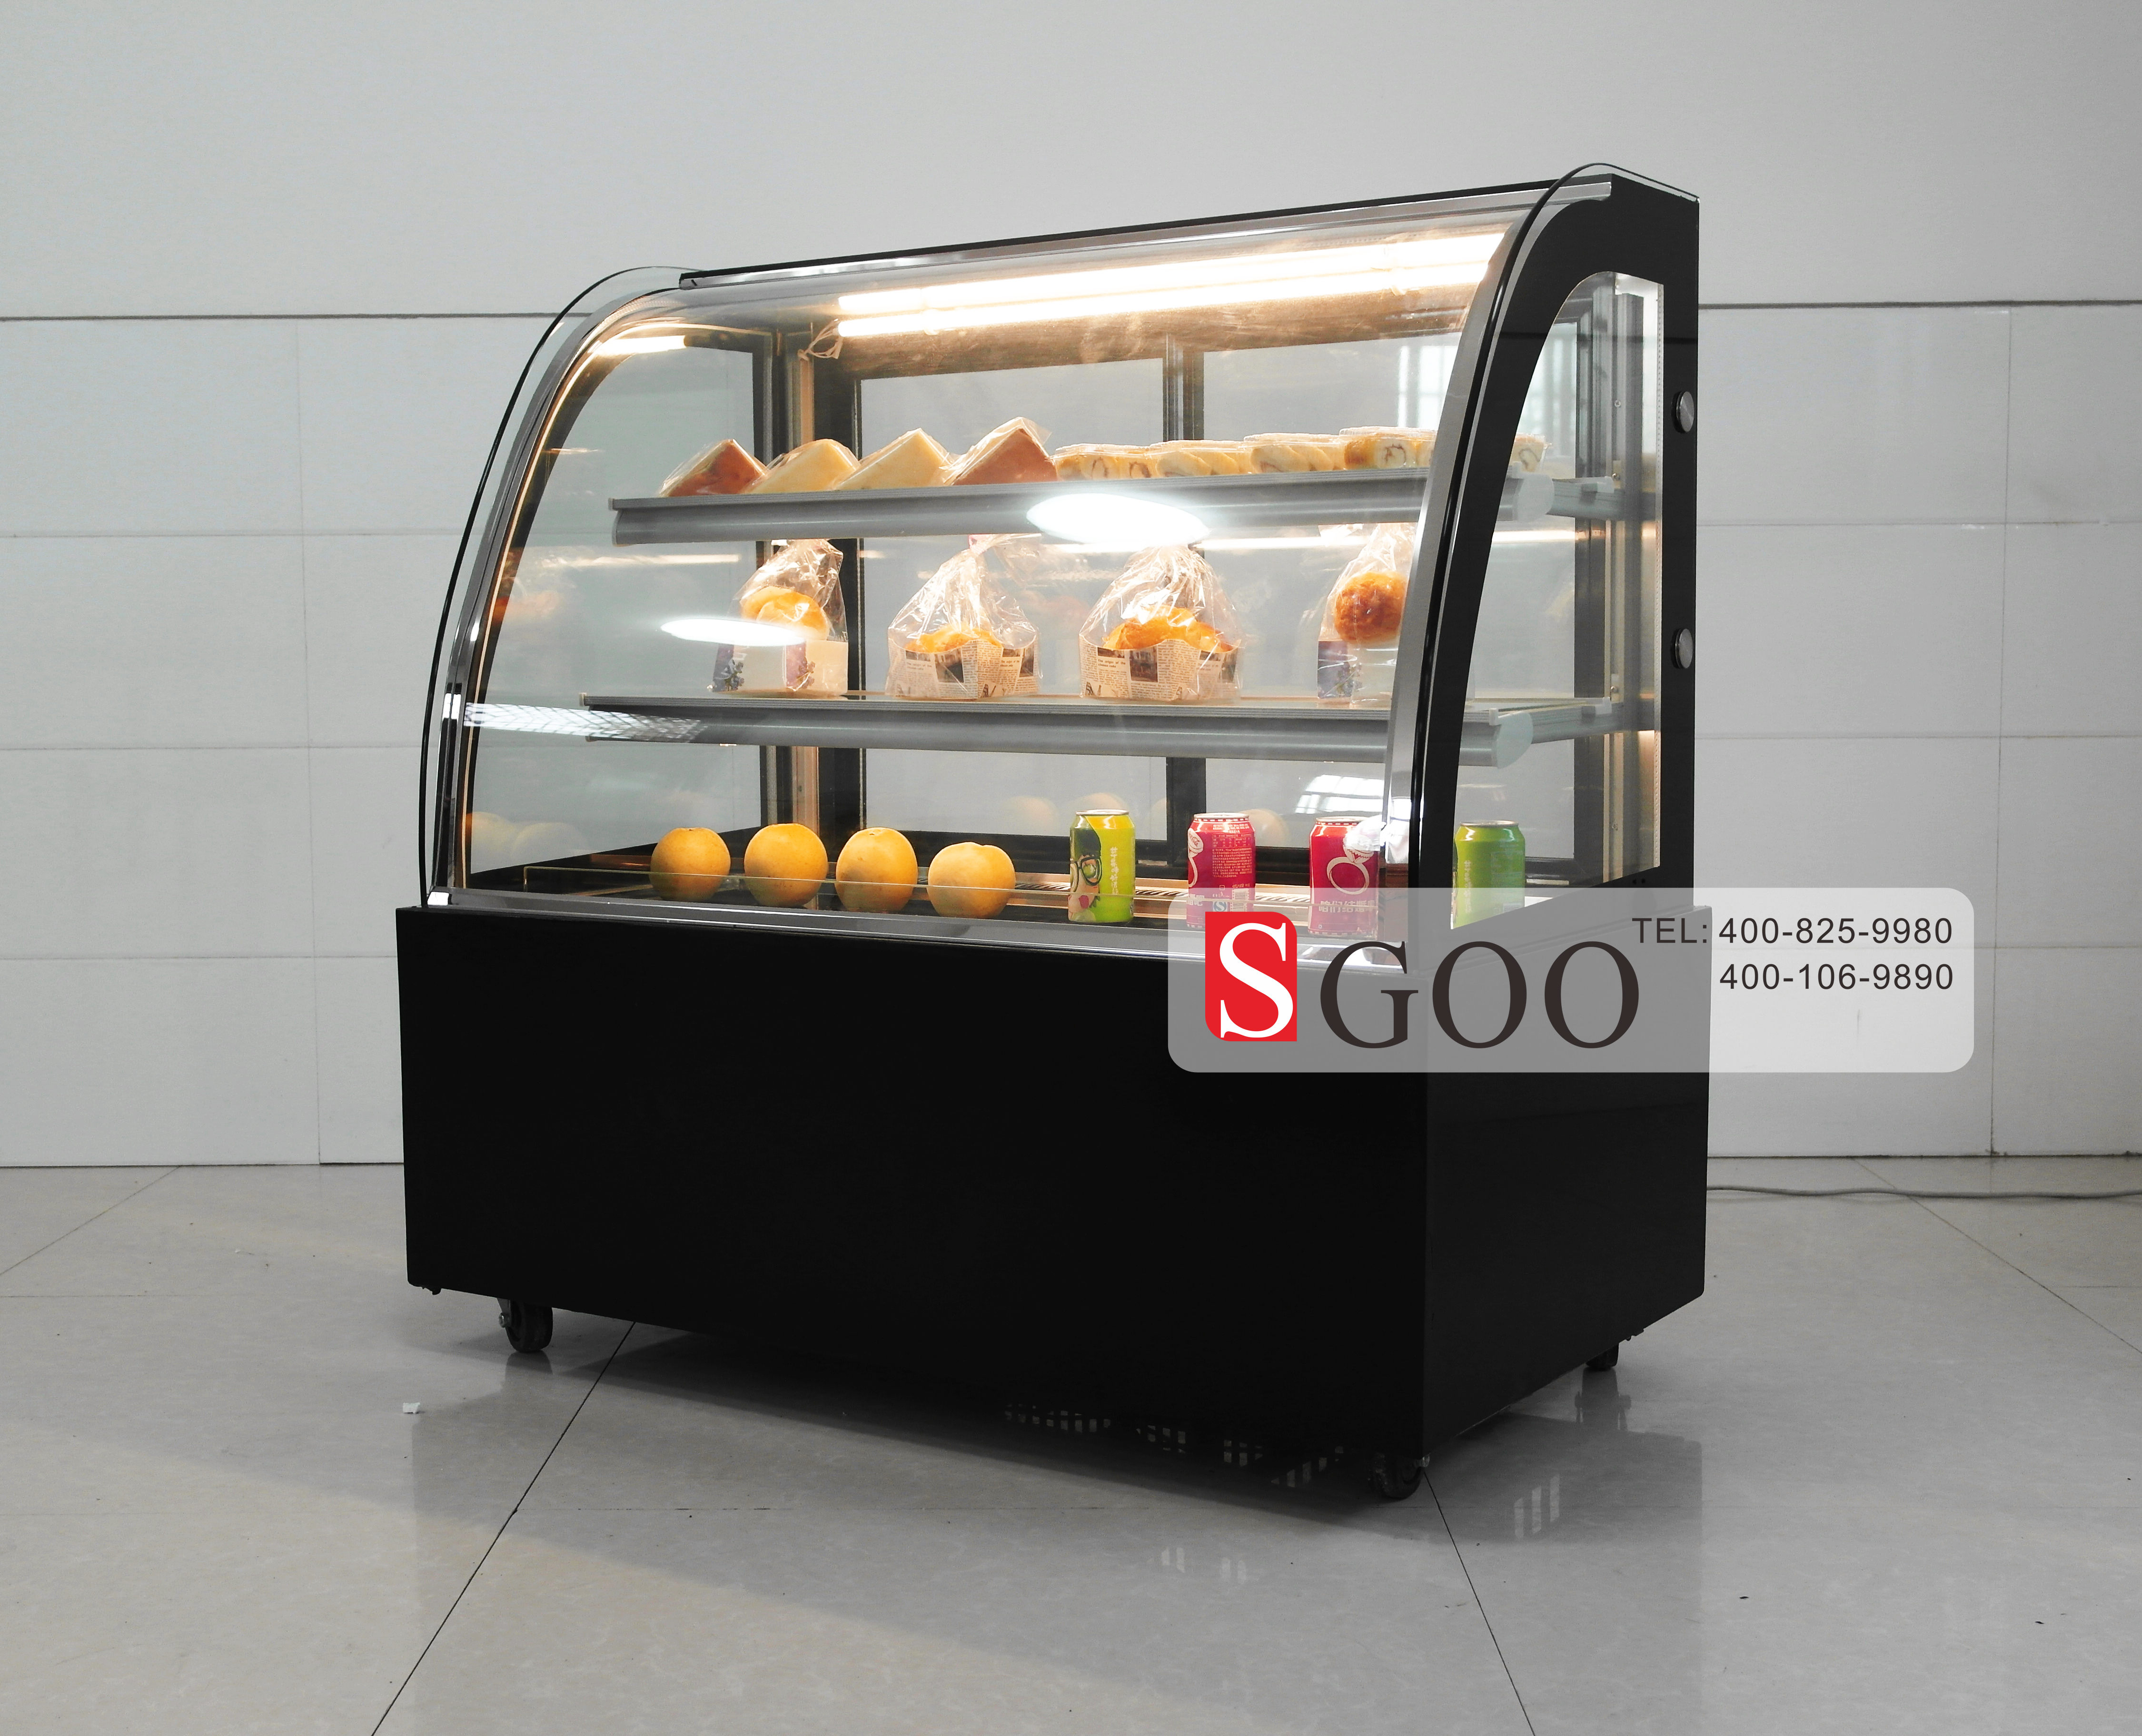 Supermarket refrigerated showcase How to install refrigeration equipment 